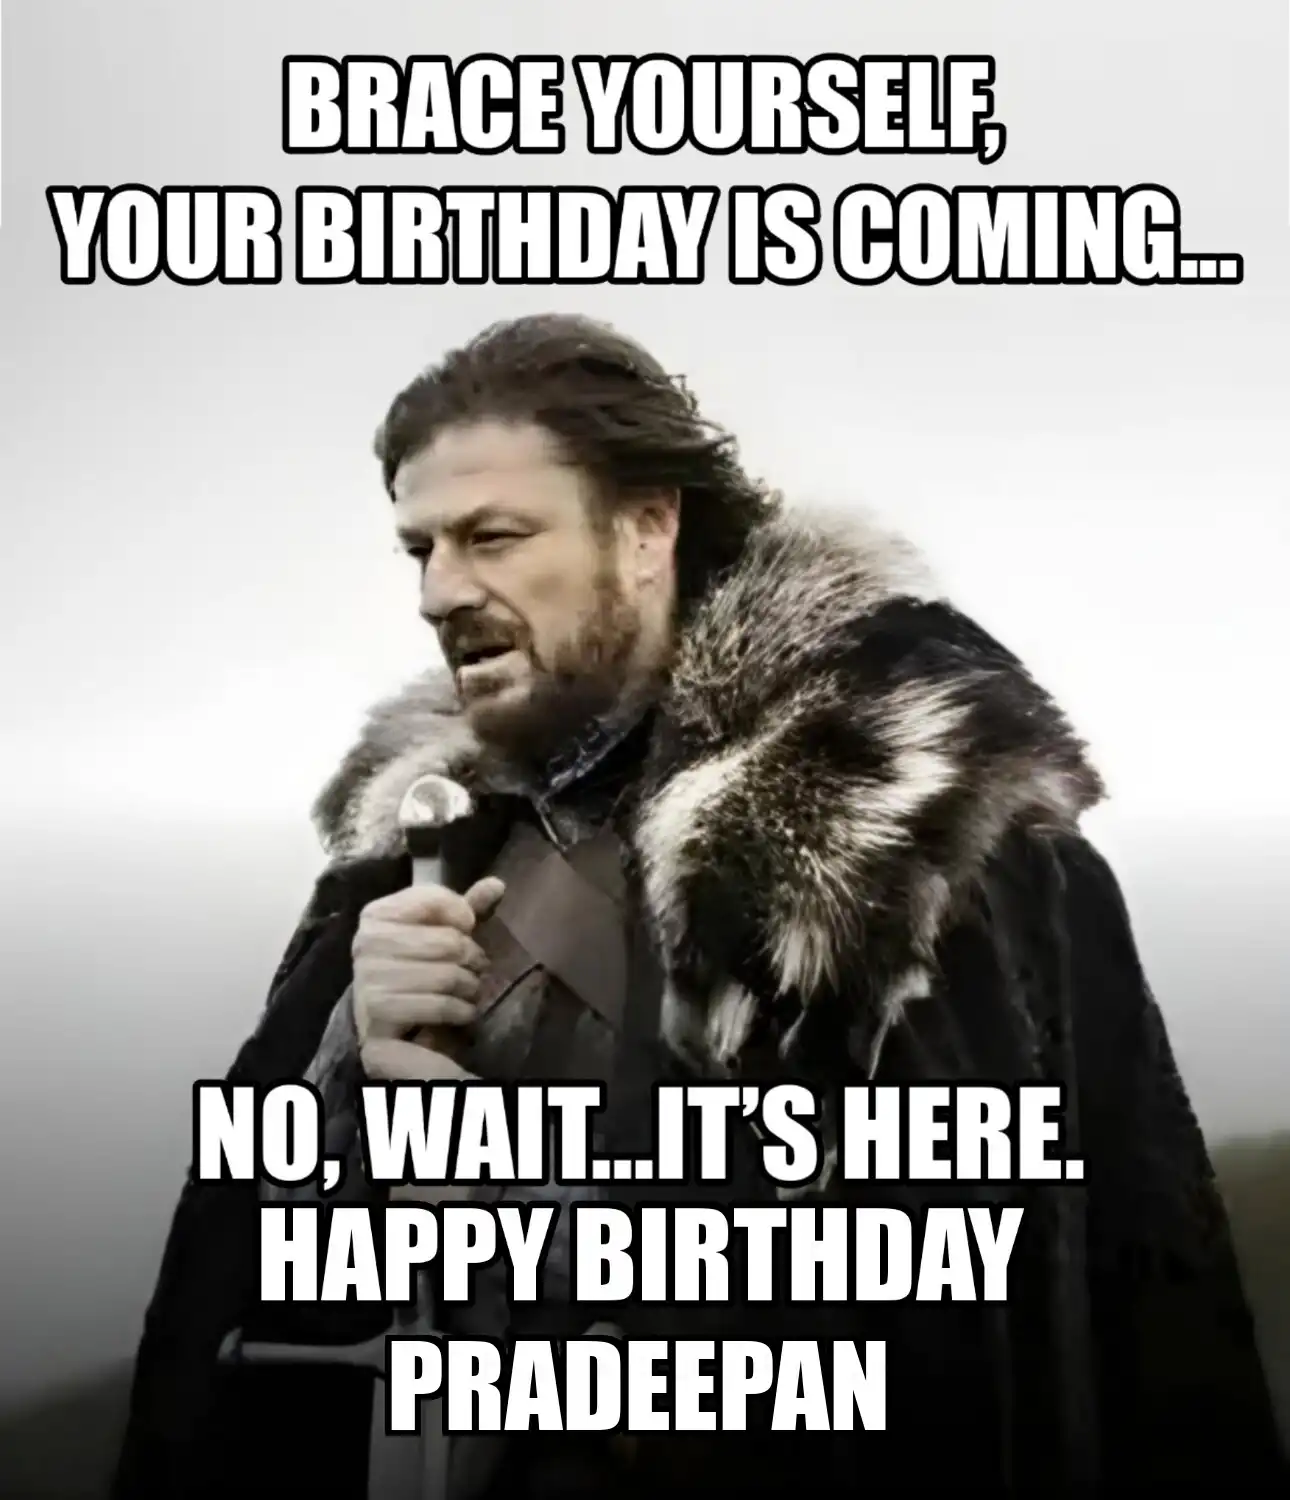 Happy Birthday Pradeepan Brace Yourself Your Birthday Is Coming Meme